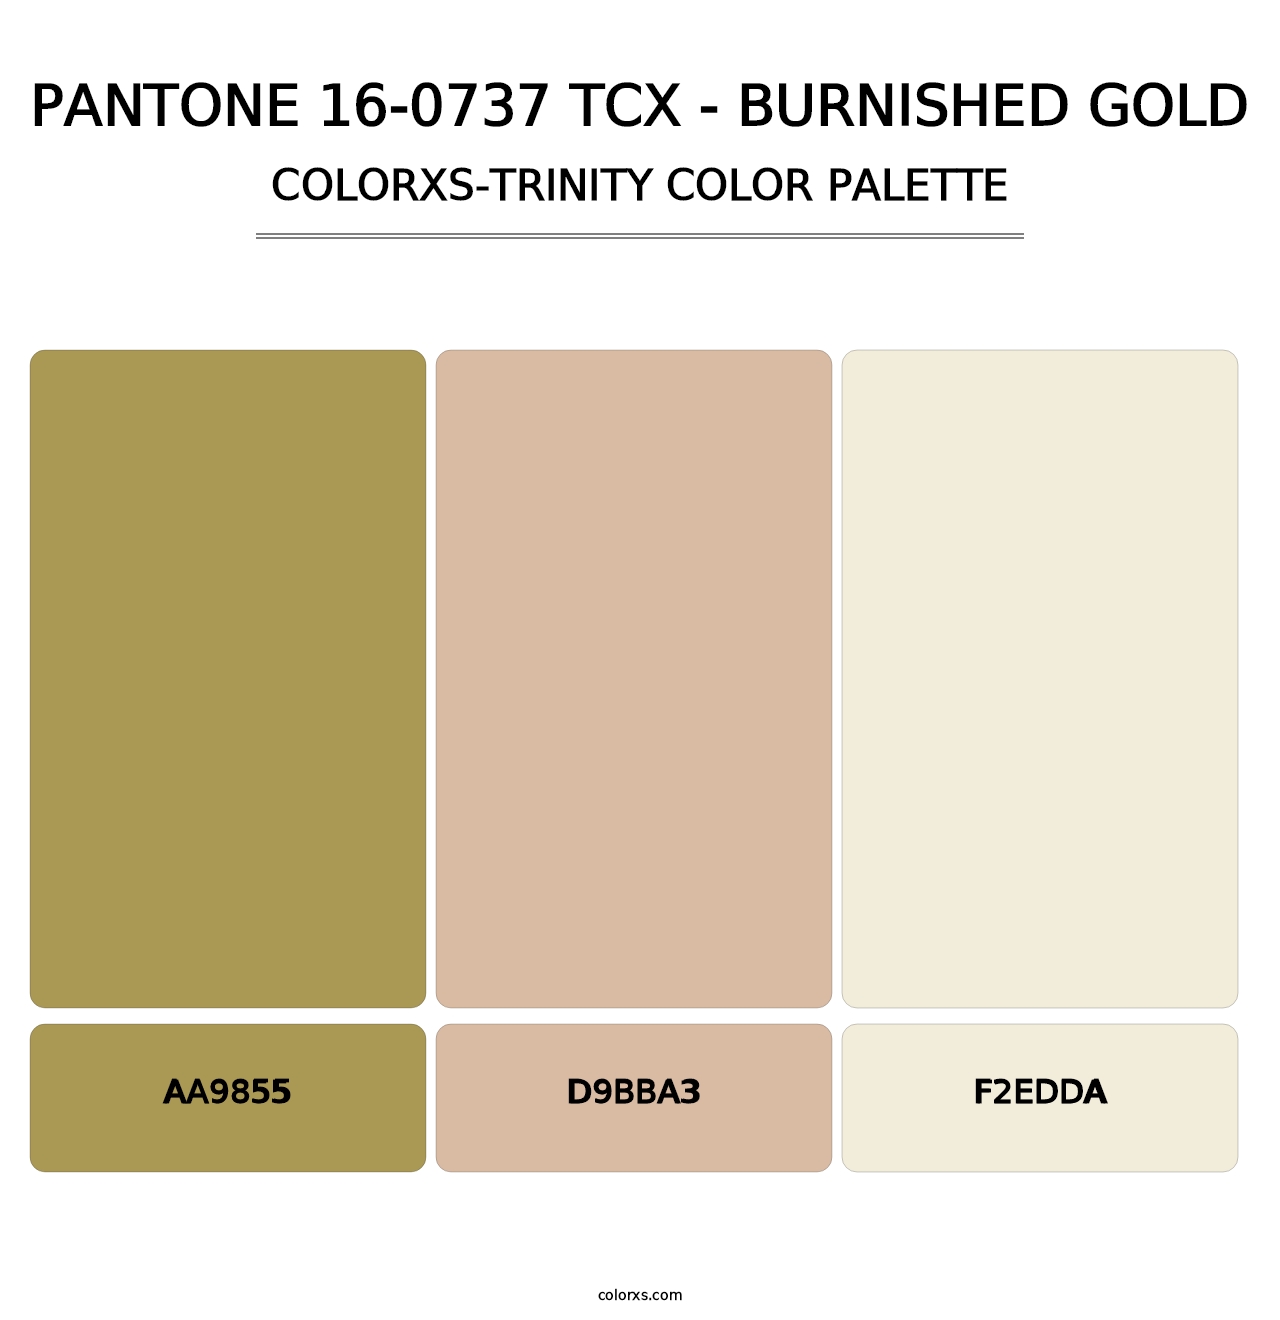 PANTONE 16-0737 TCX - Burnished Gold - Colorxs Trinity Palette